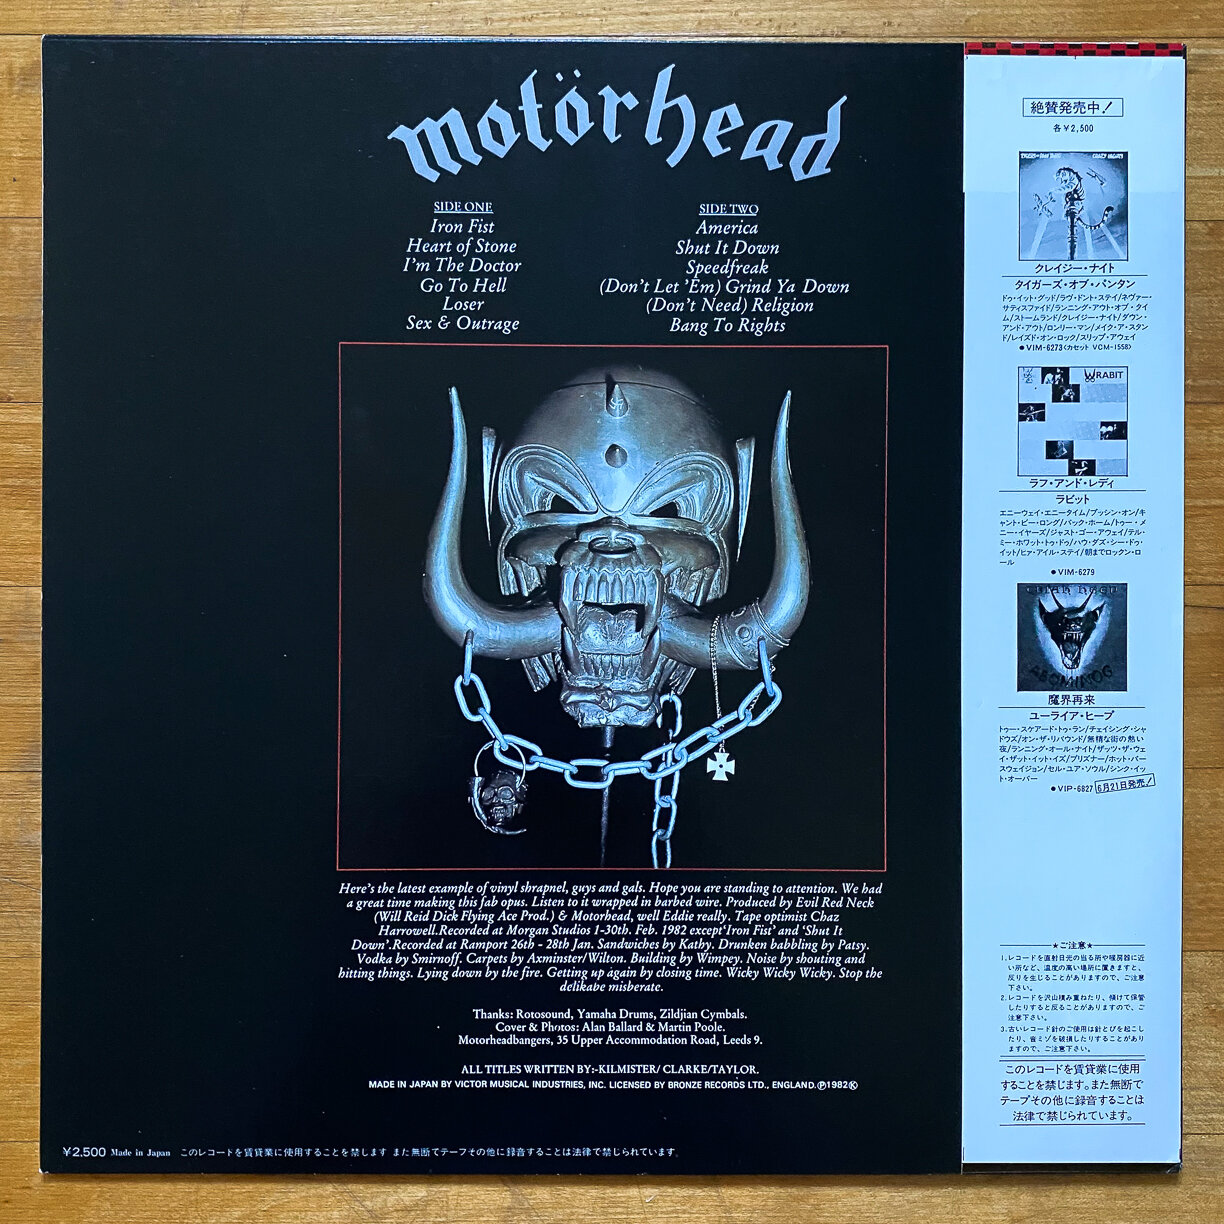 Motörhead's Iron Fist #metal #metalhead #heavymetal #review